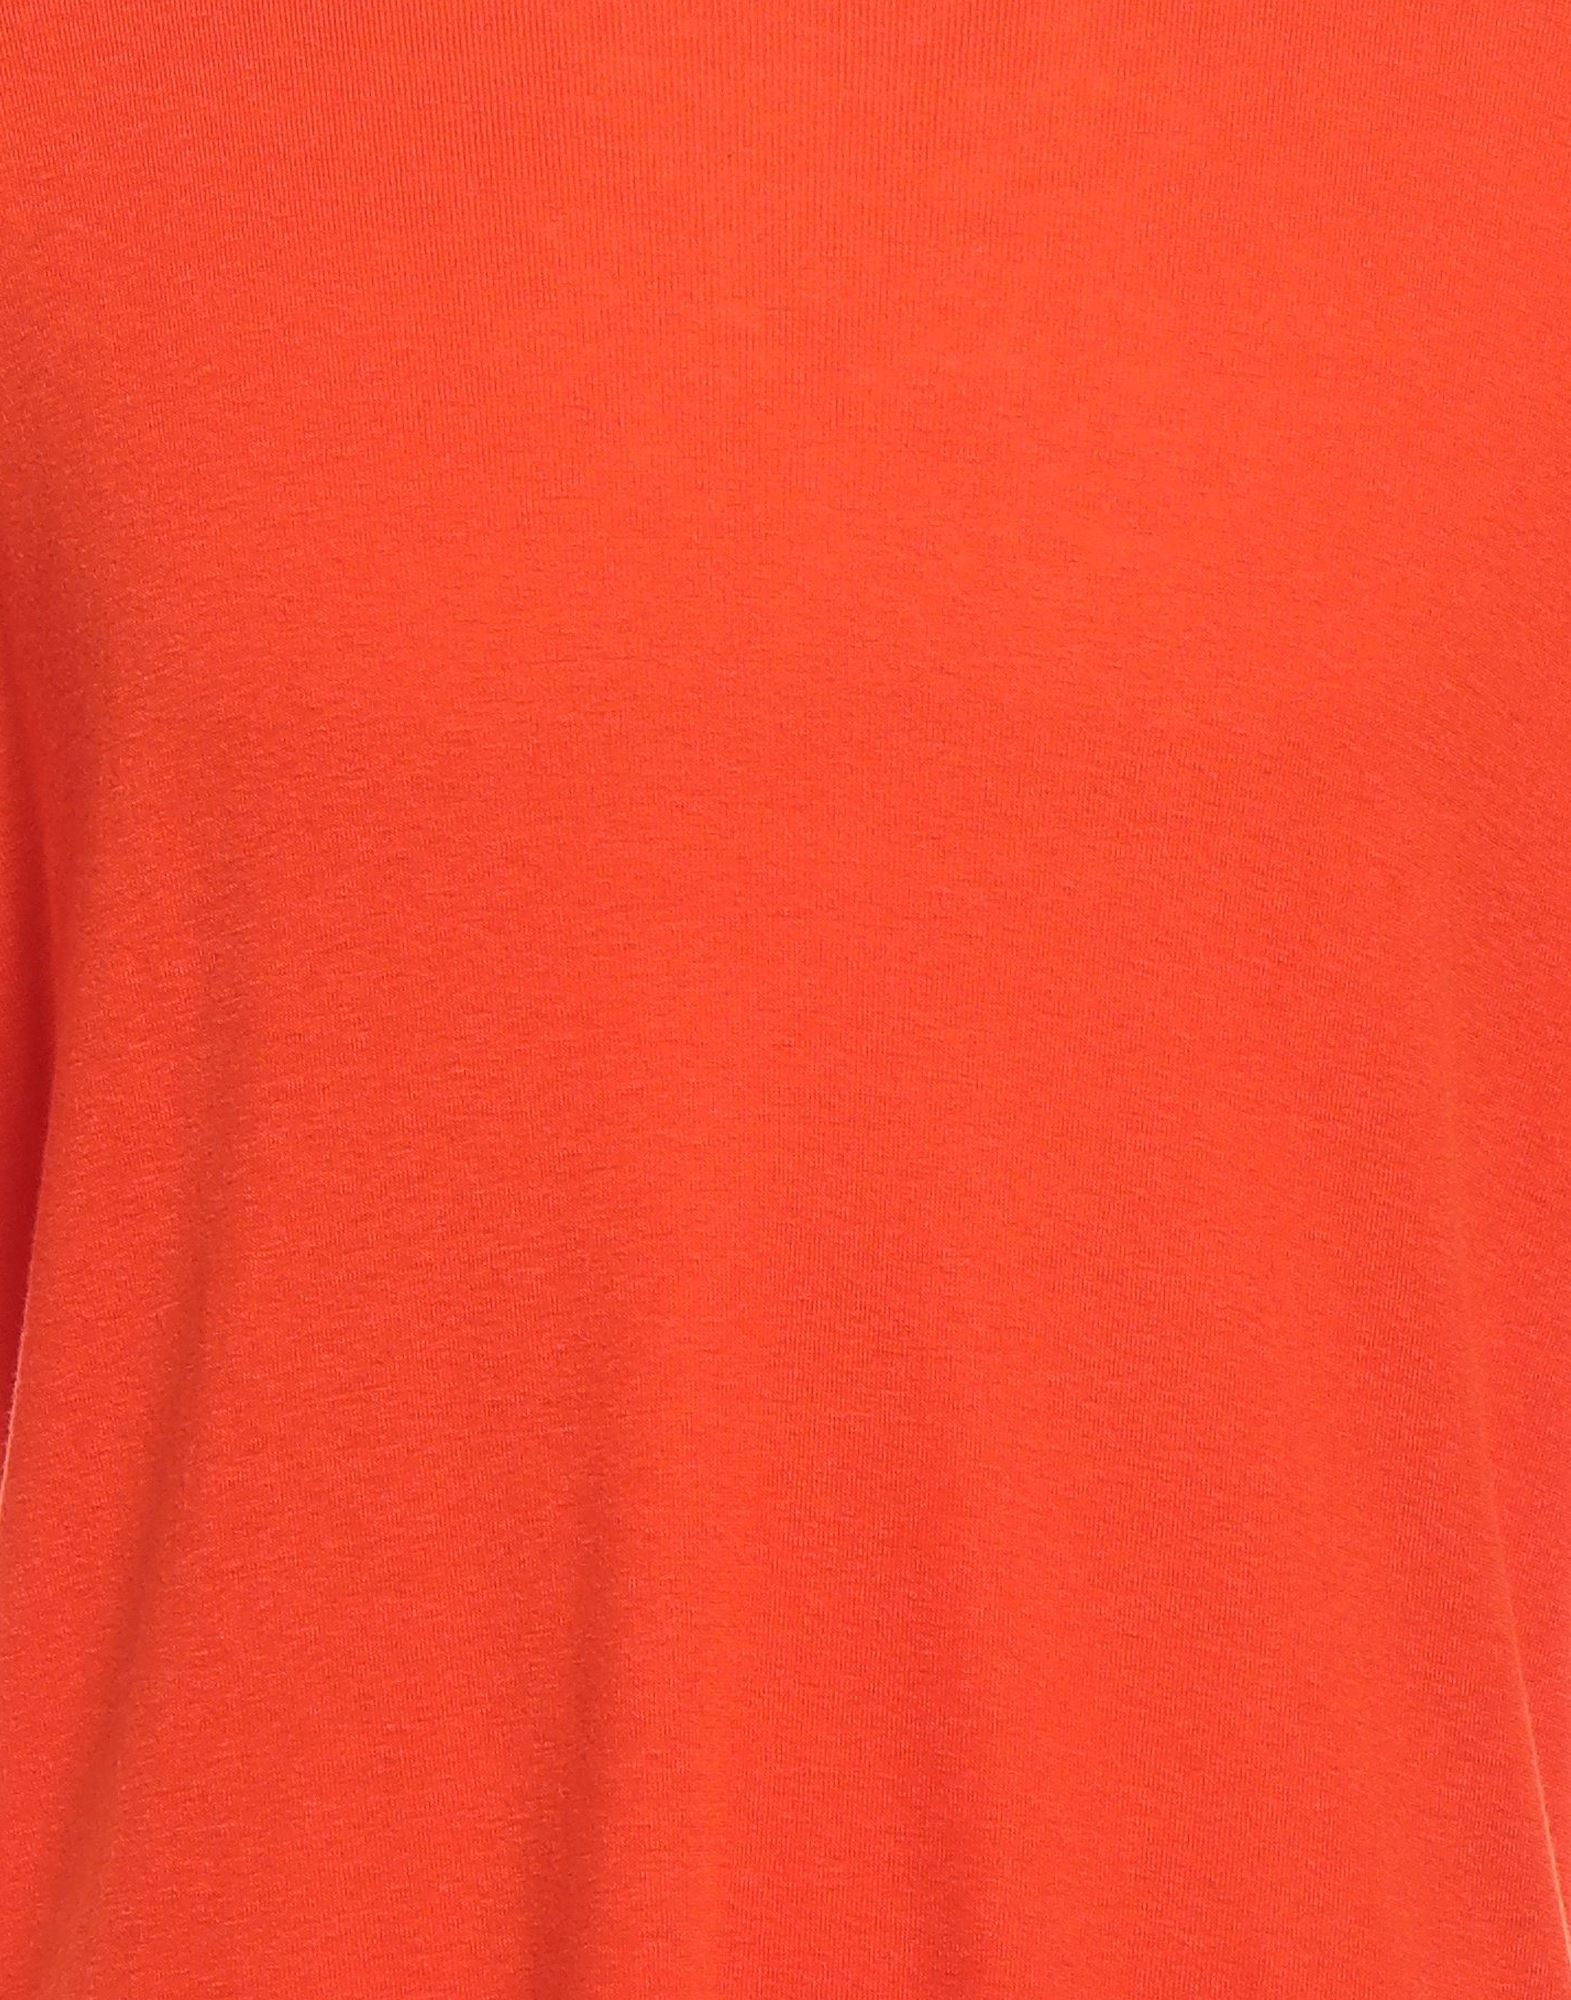 Orange Men's T-shirt - 4